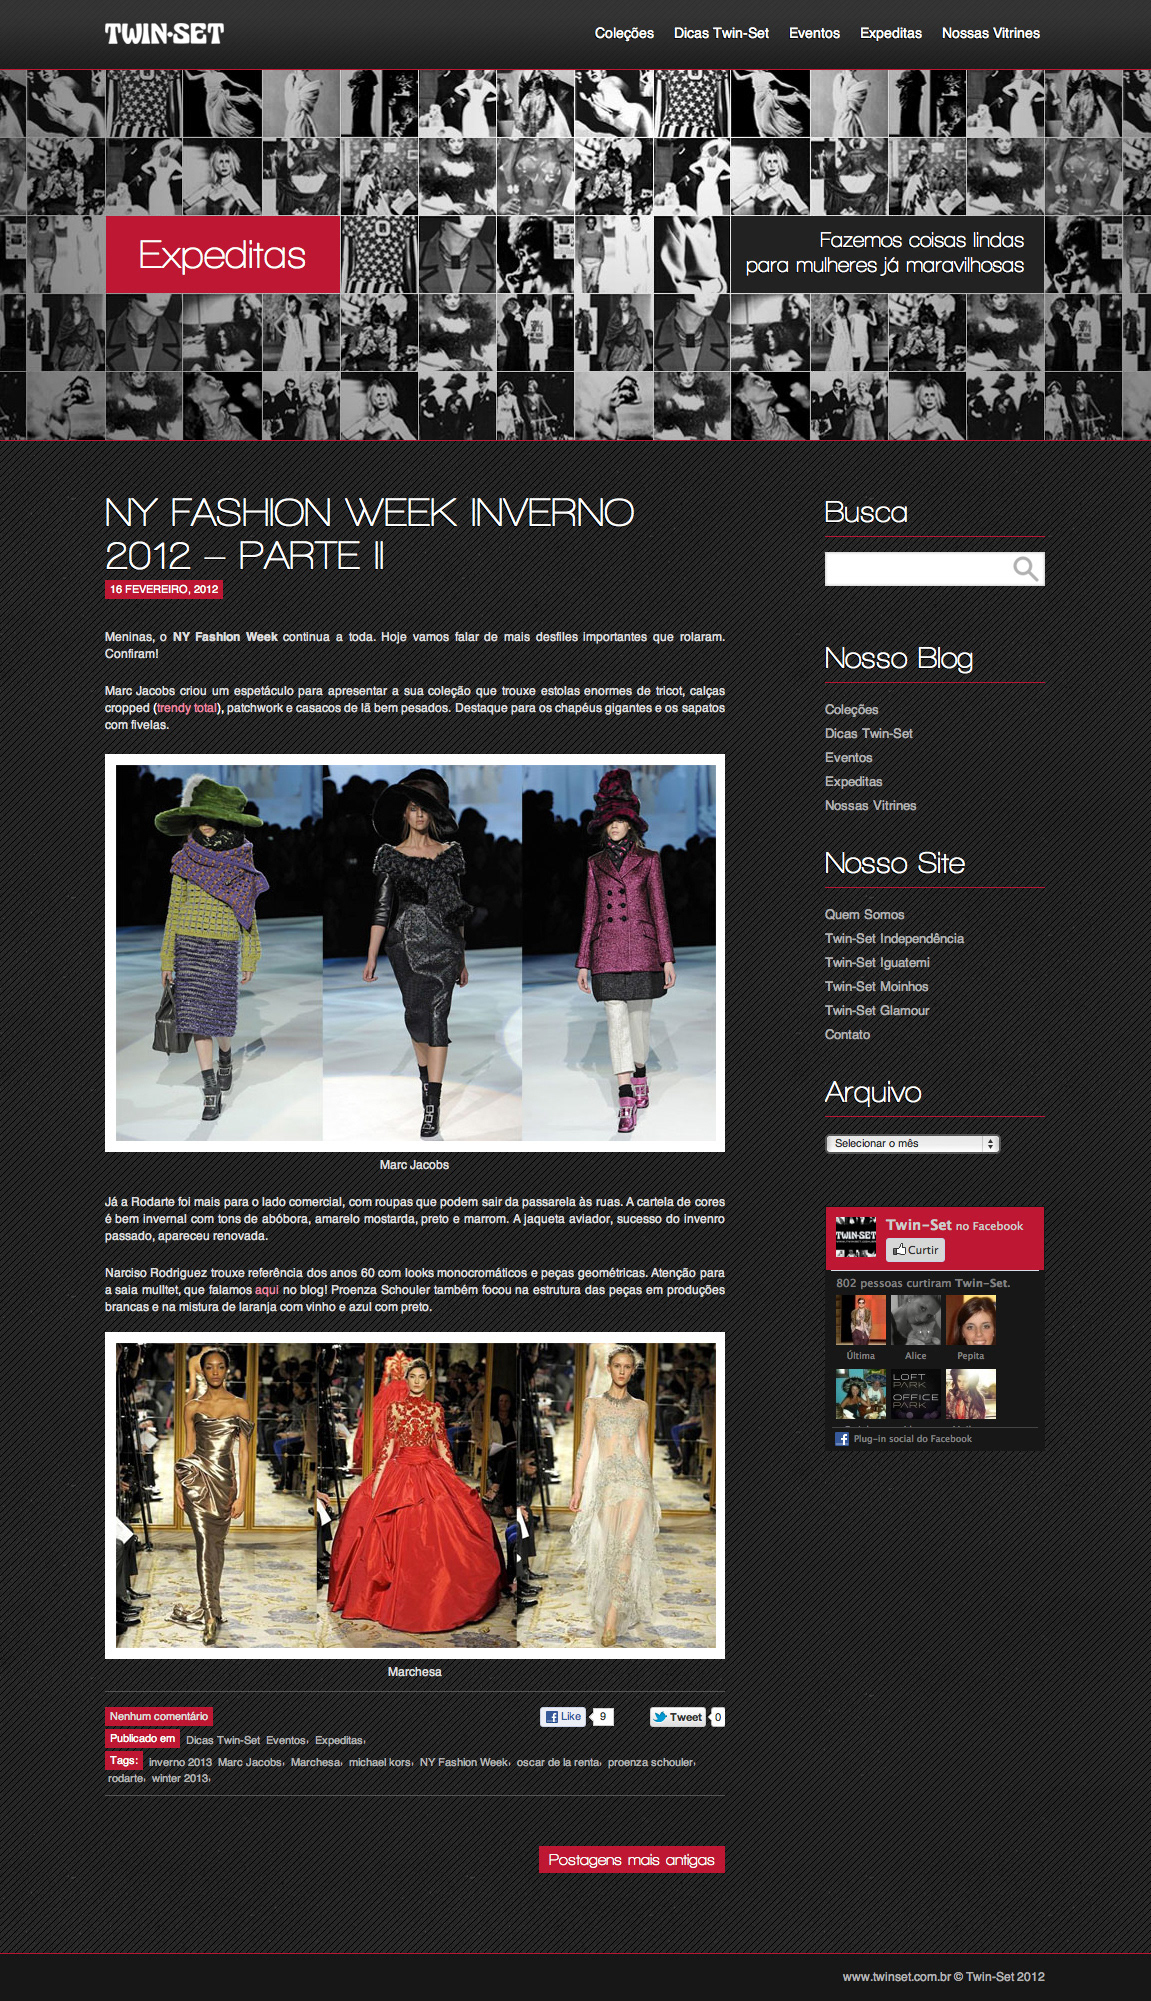 site elegant Web twinset Twin-set glamour moda clothes shop loja roupas Website Brasil porto alegre exclusive css3 html5 Blog